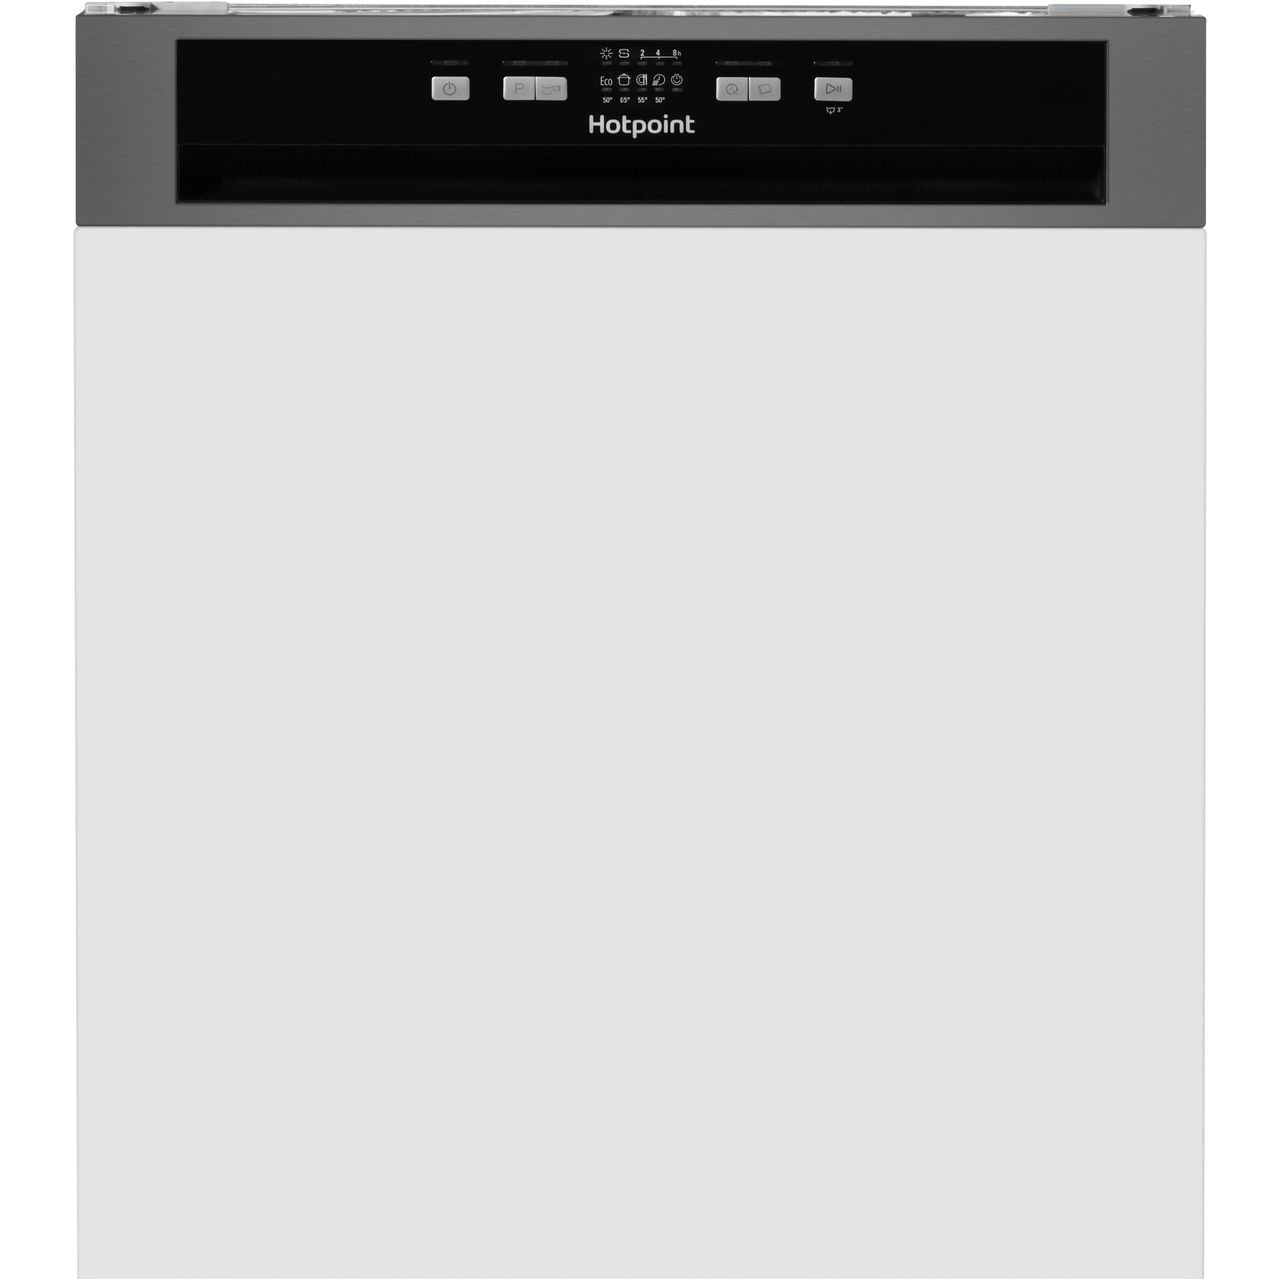 Hotpoint Semi-integrated Dishwasher 